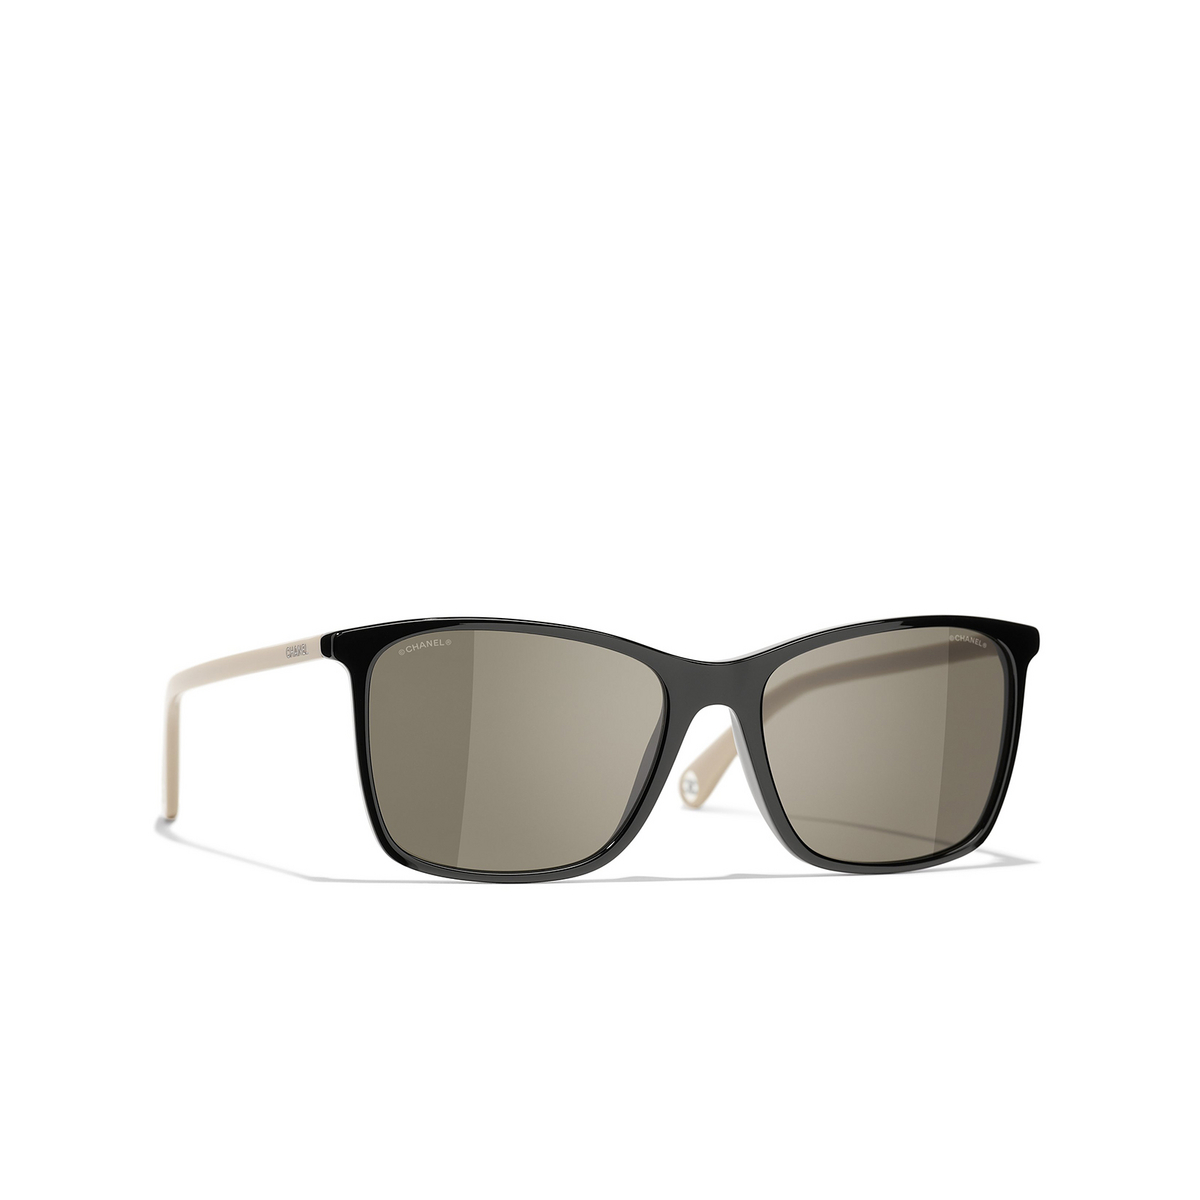 CHANEL square Sunglasses C942/3 Black & Beige - three-quarters view